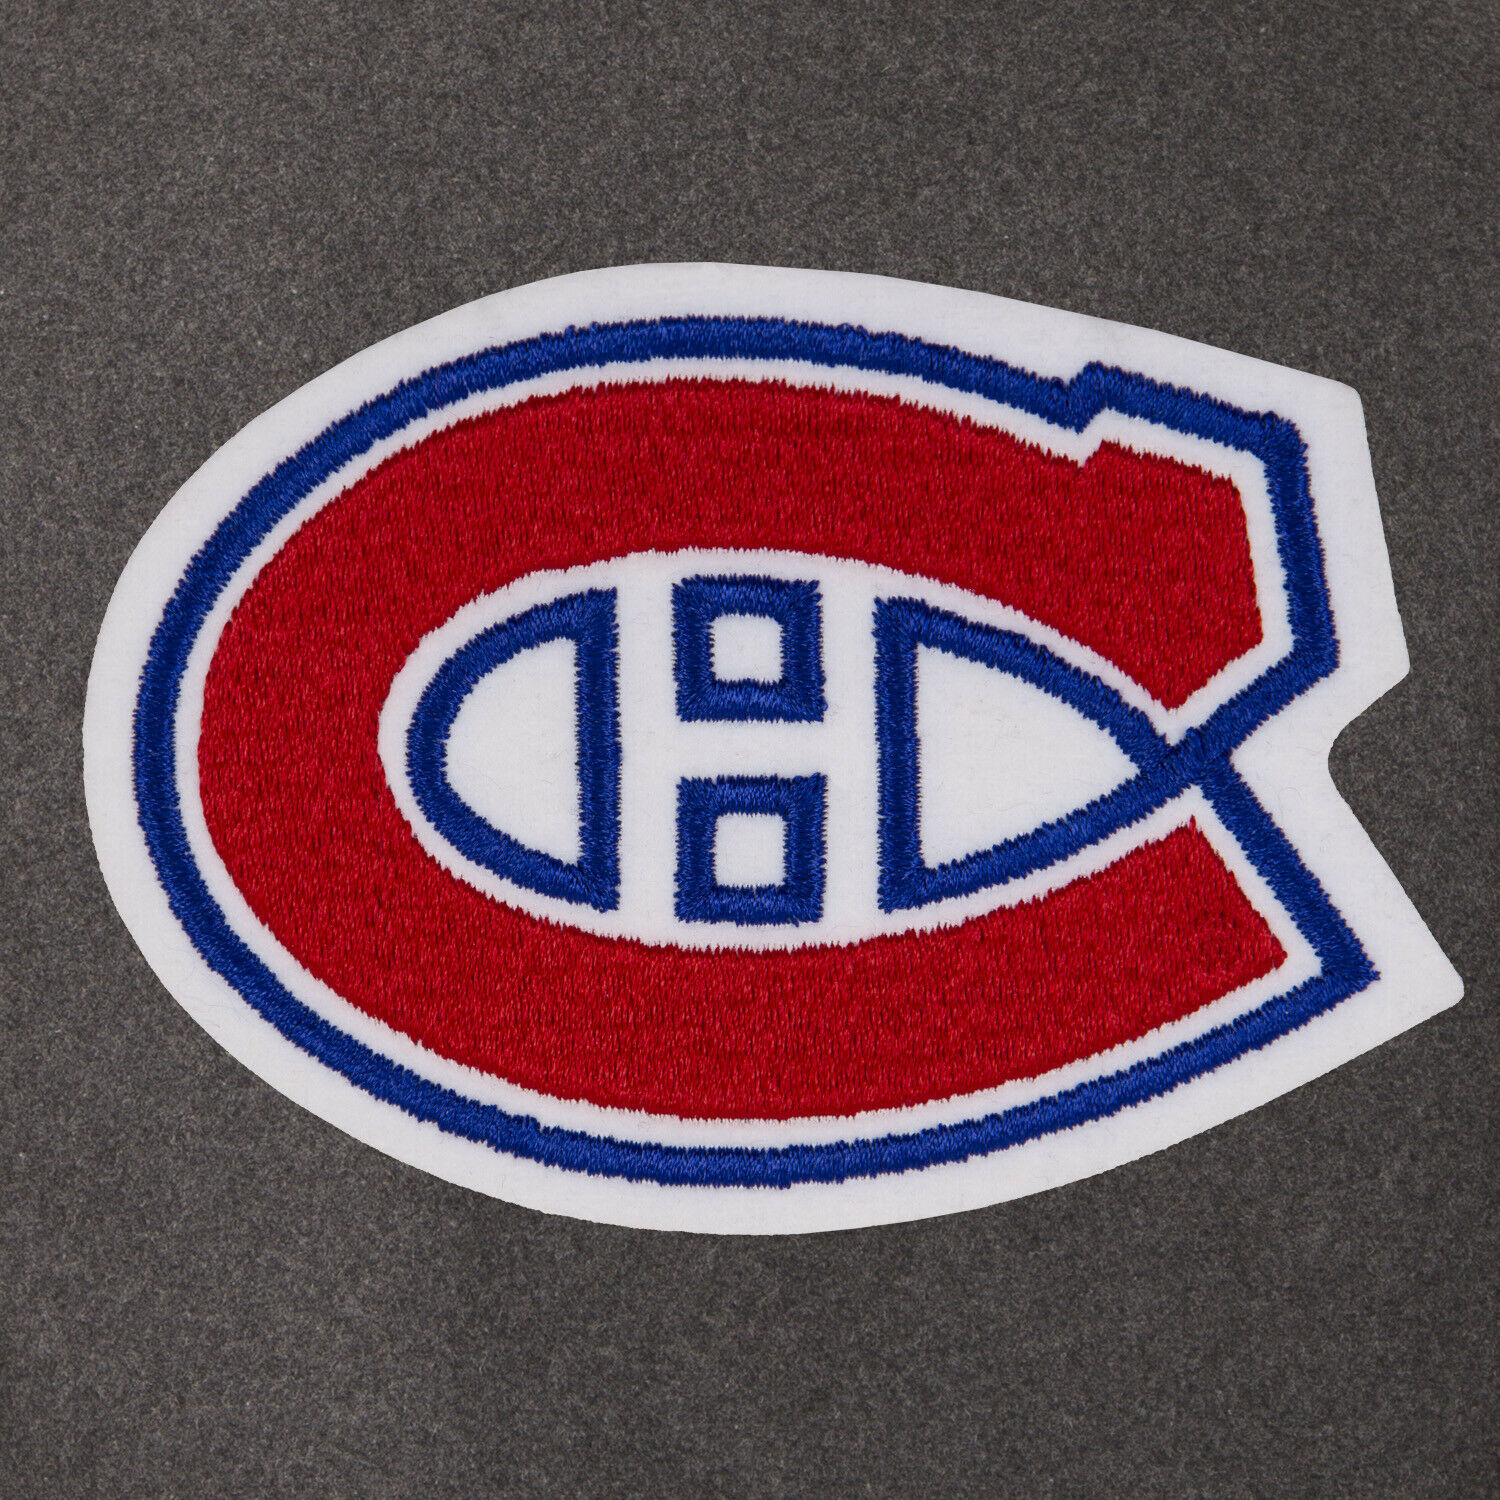 NHL St. Louis Blues Reversible Fleece Jacket PVC Sleeves Embroidered Logos  JHD